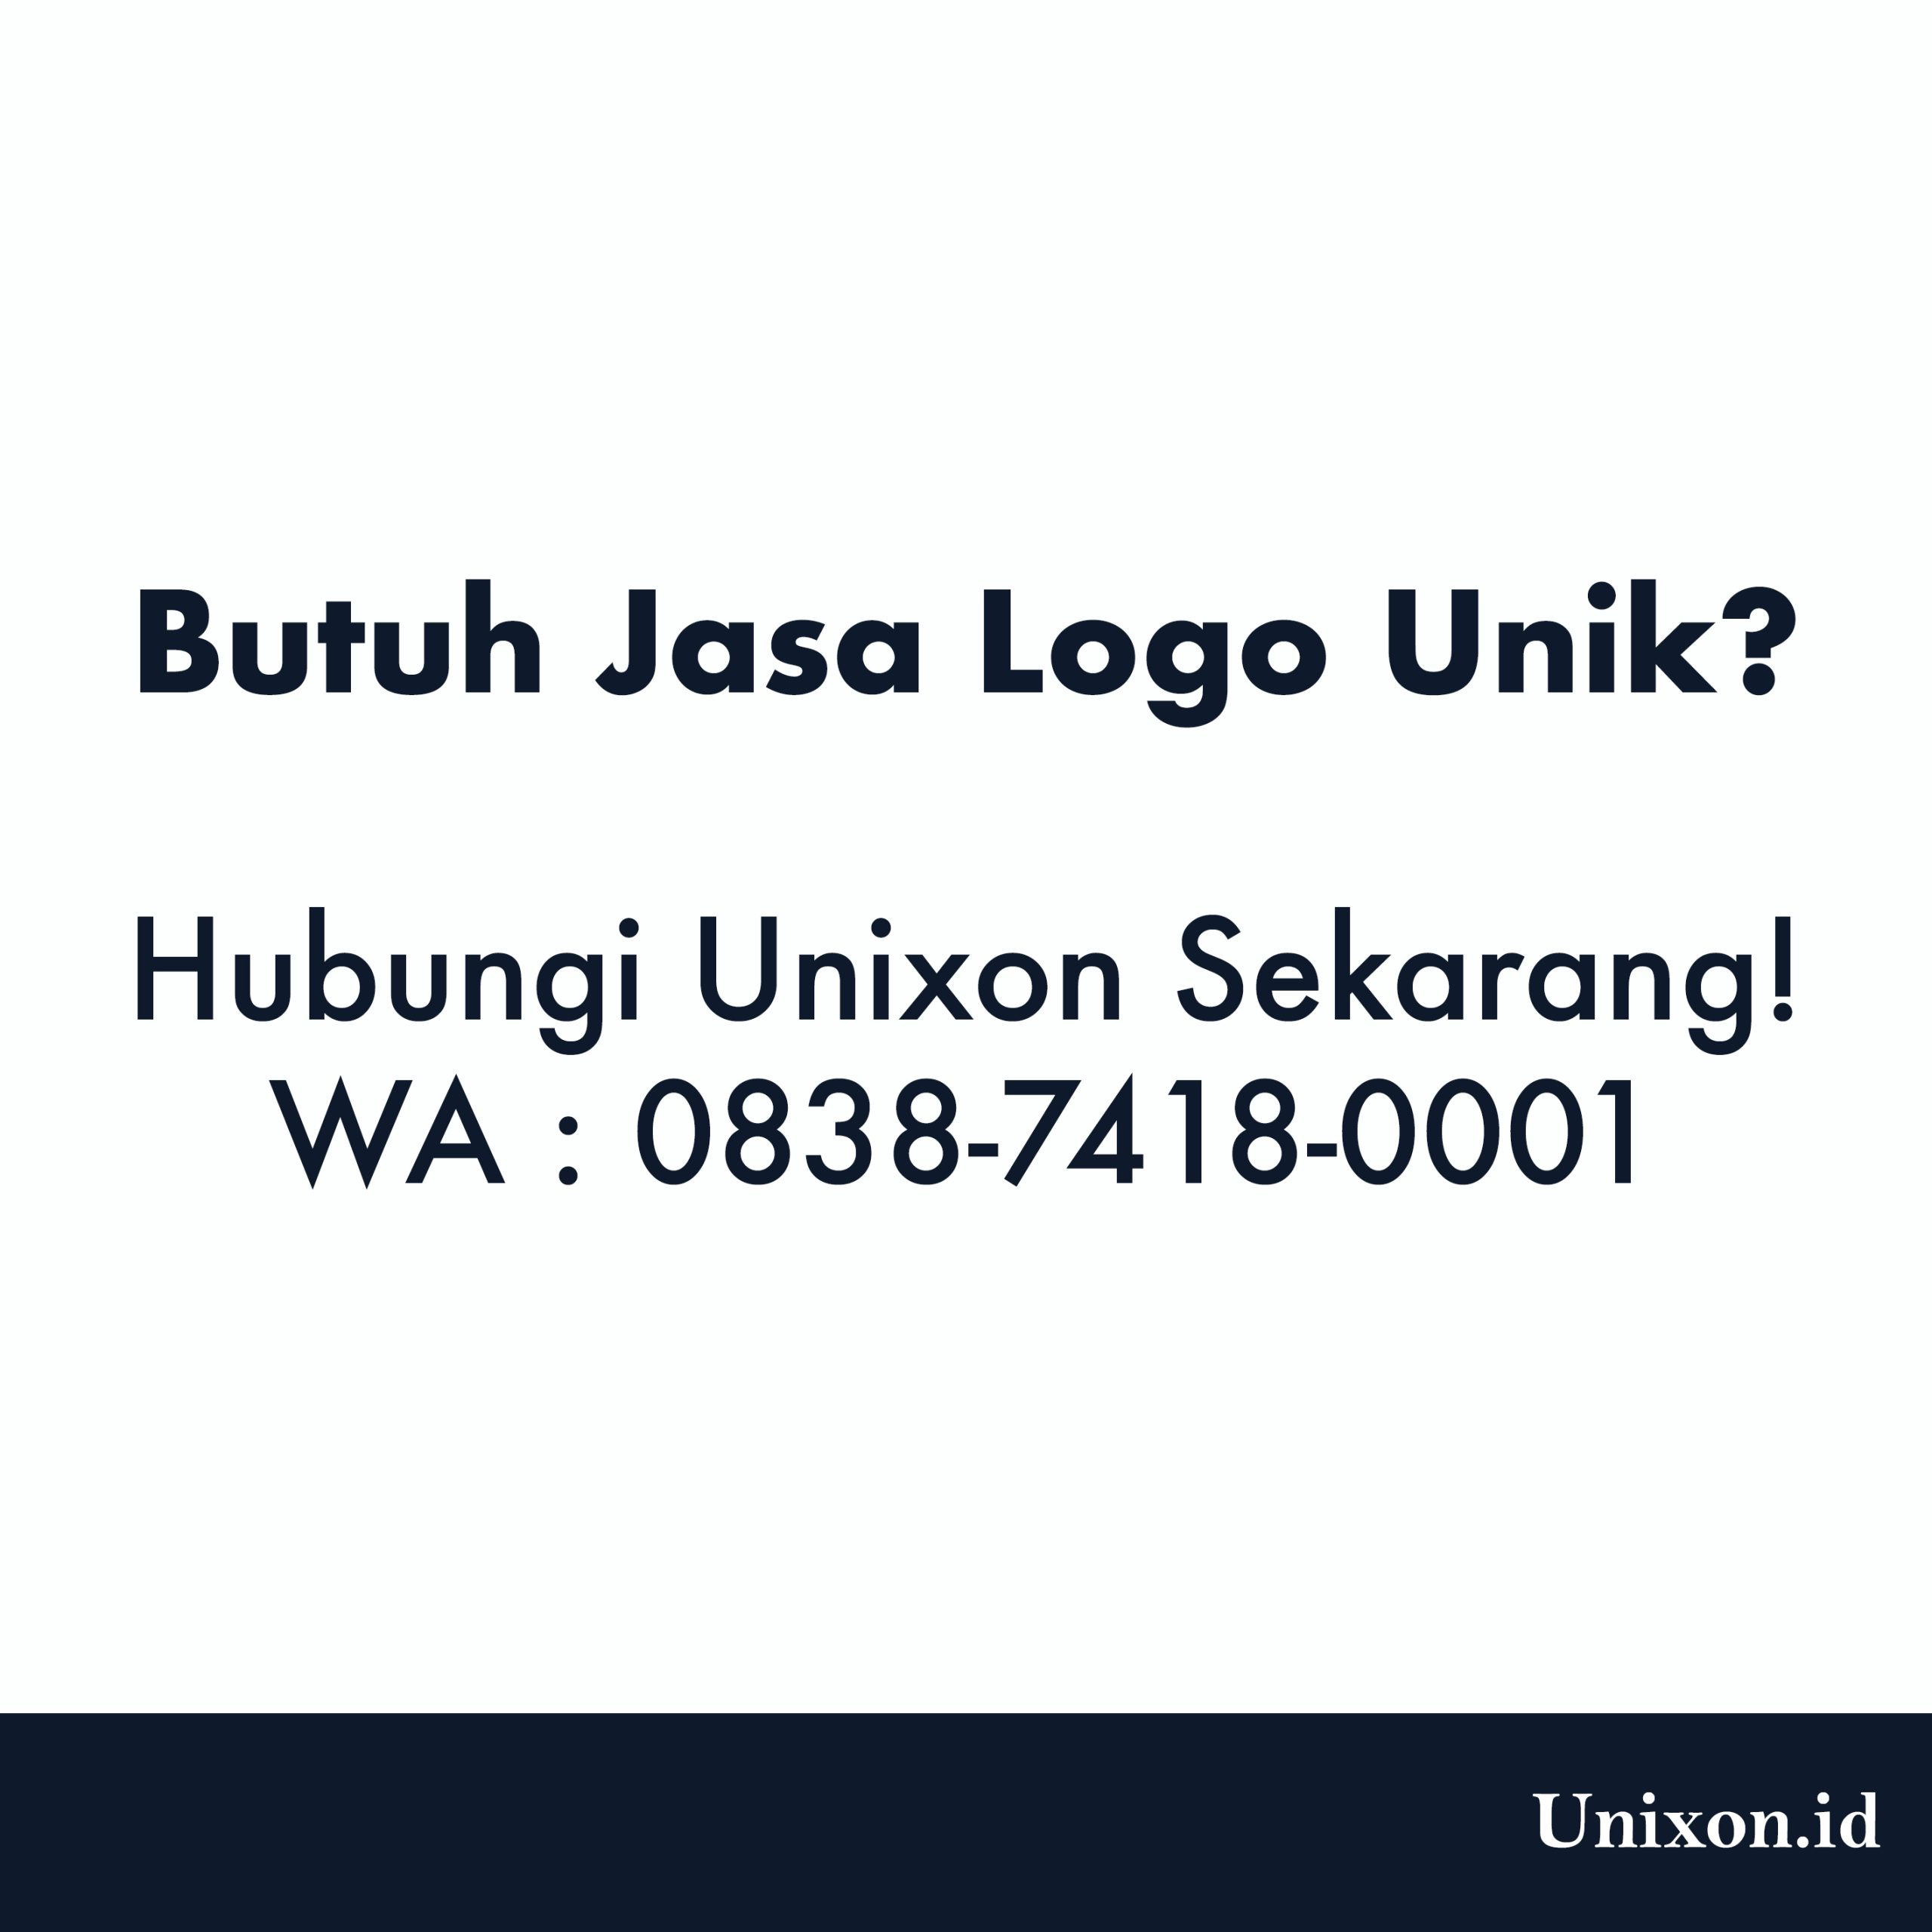 Jasa Logo Unik